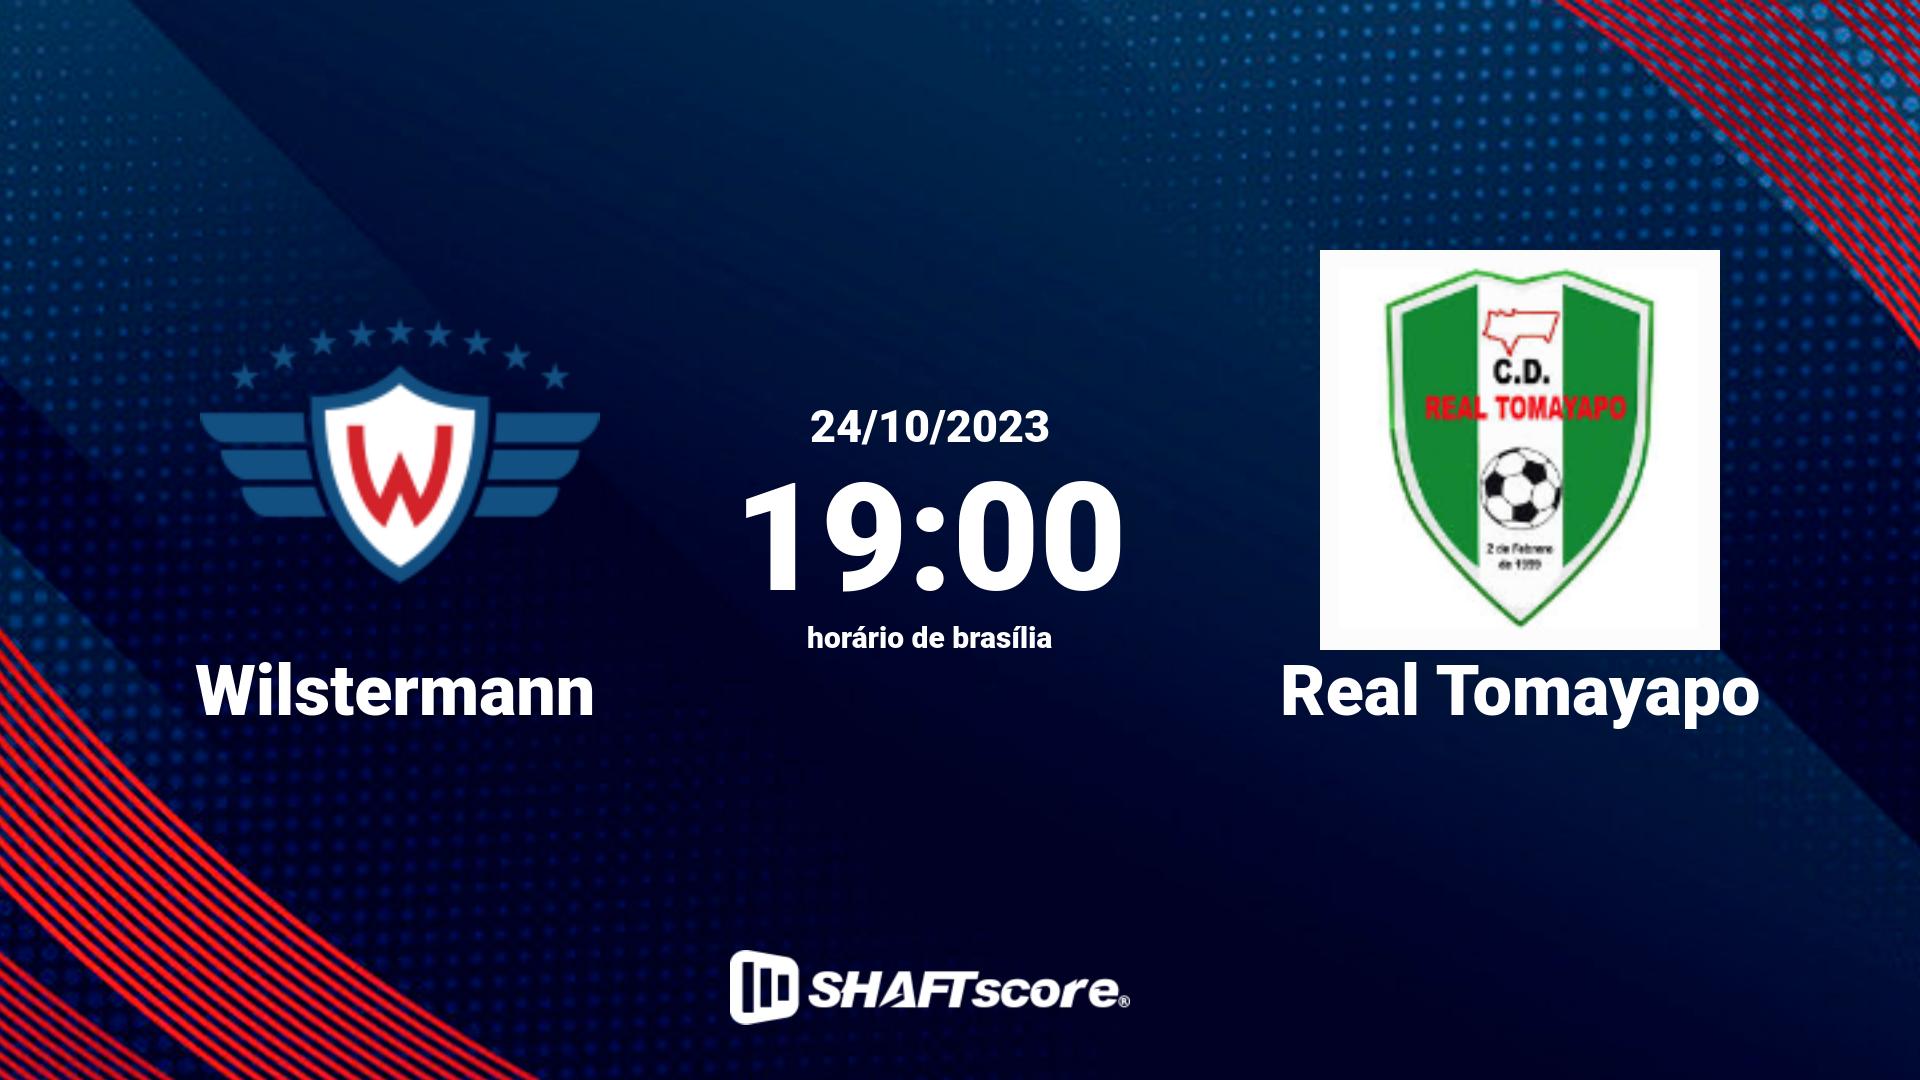 Estatísticas do jogo Wilstermann vs Real Tomayapo 24.10 19:00